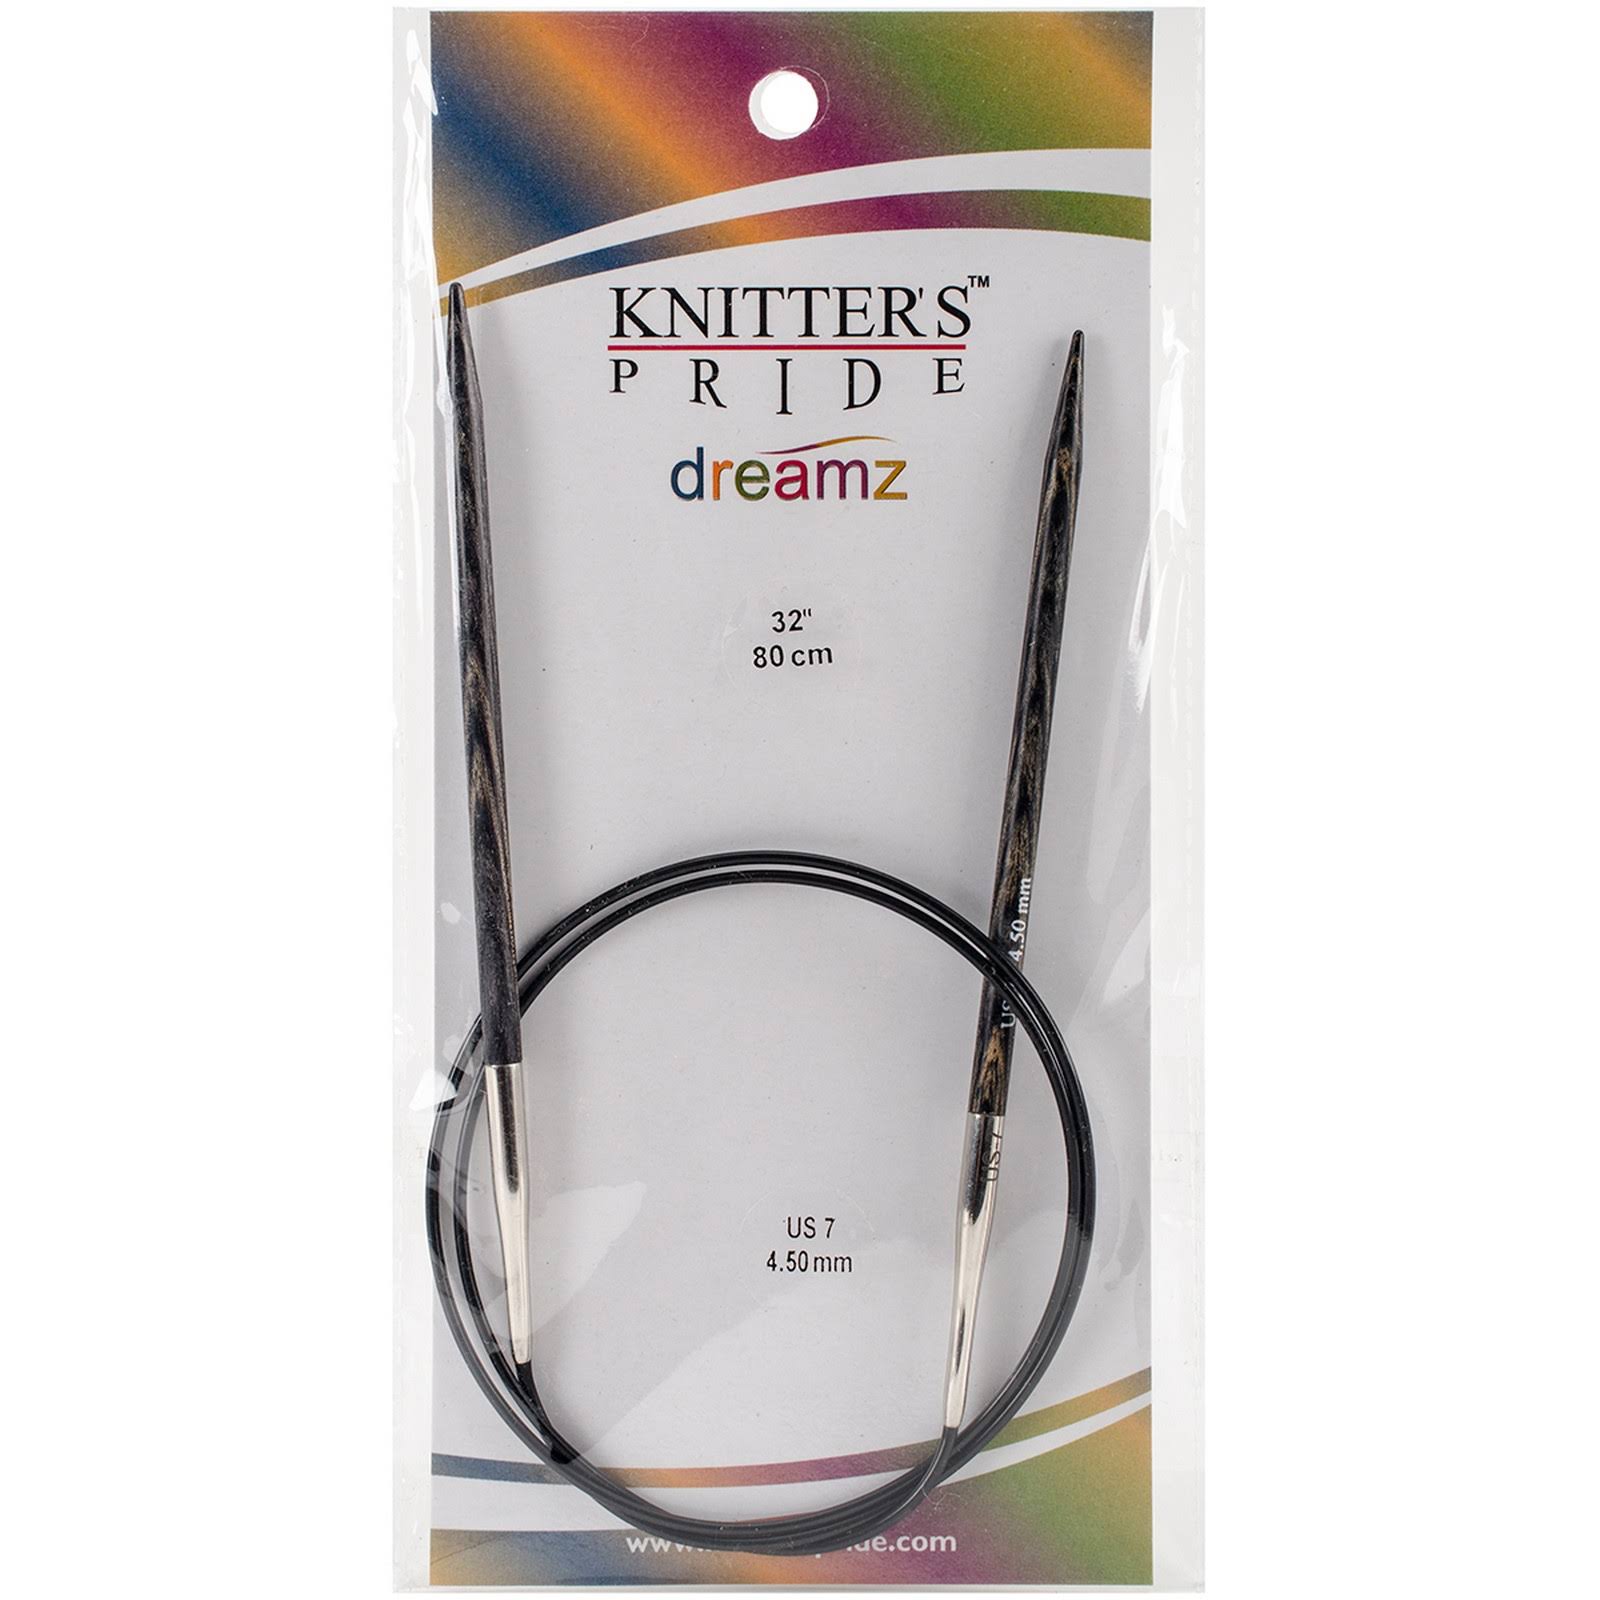 Knitters Pride Dreamz Circular Knitting Needles - Size 8, 32"